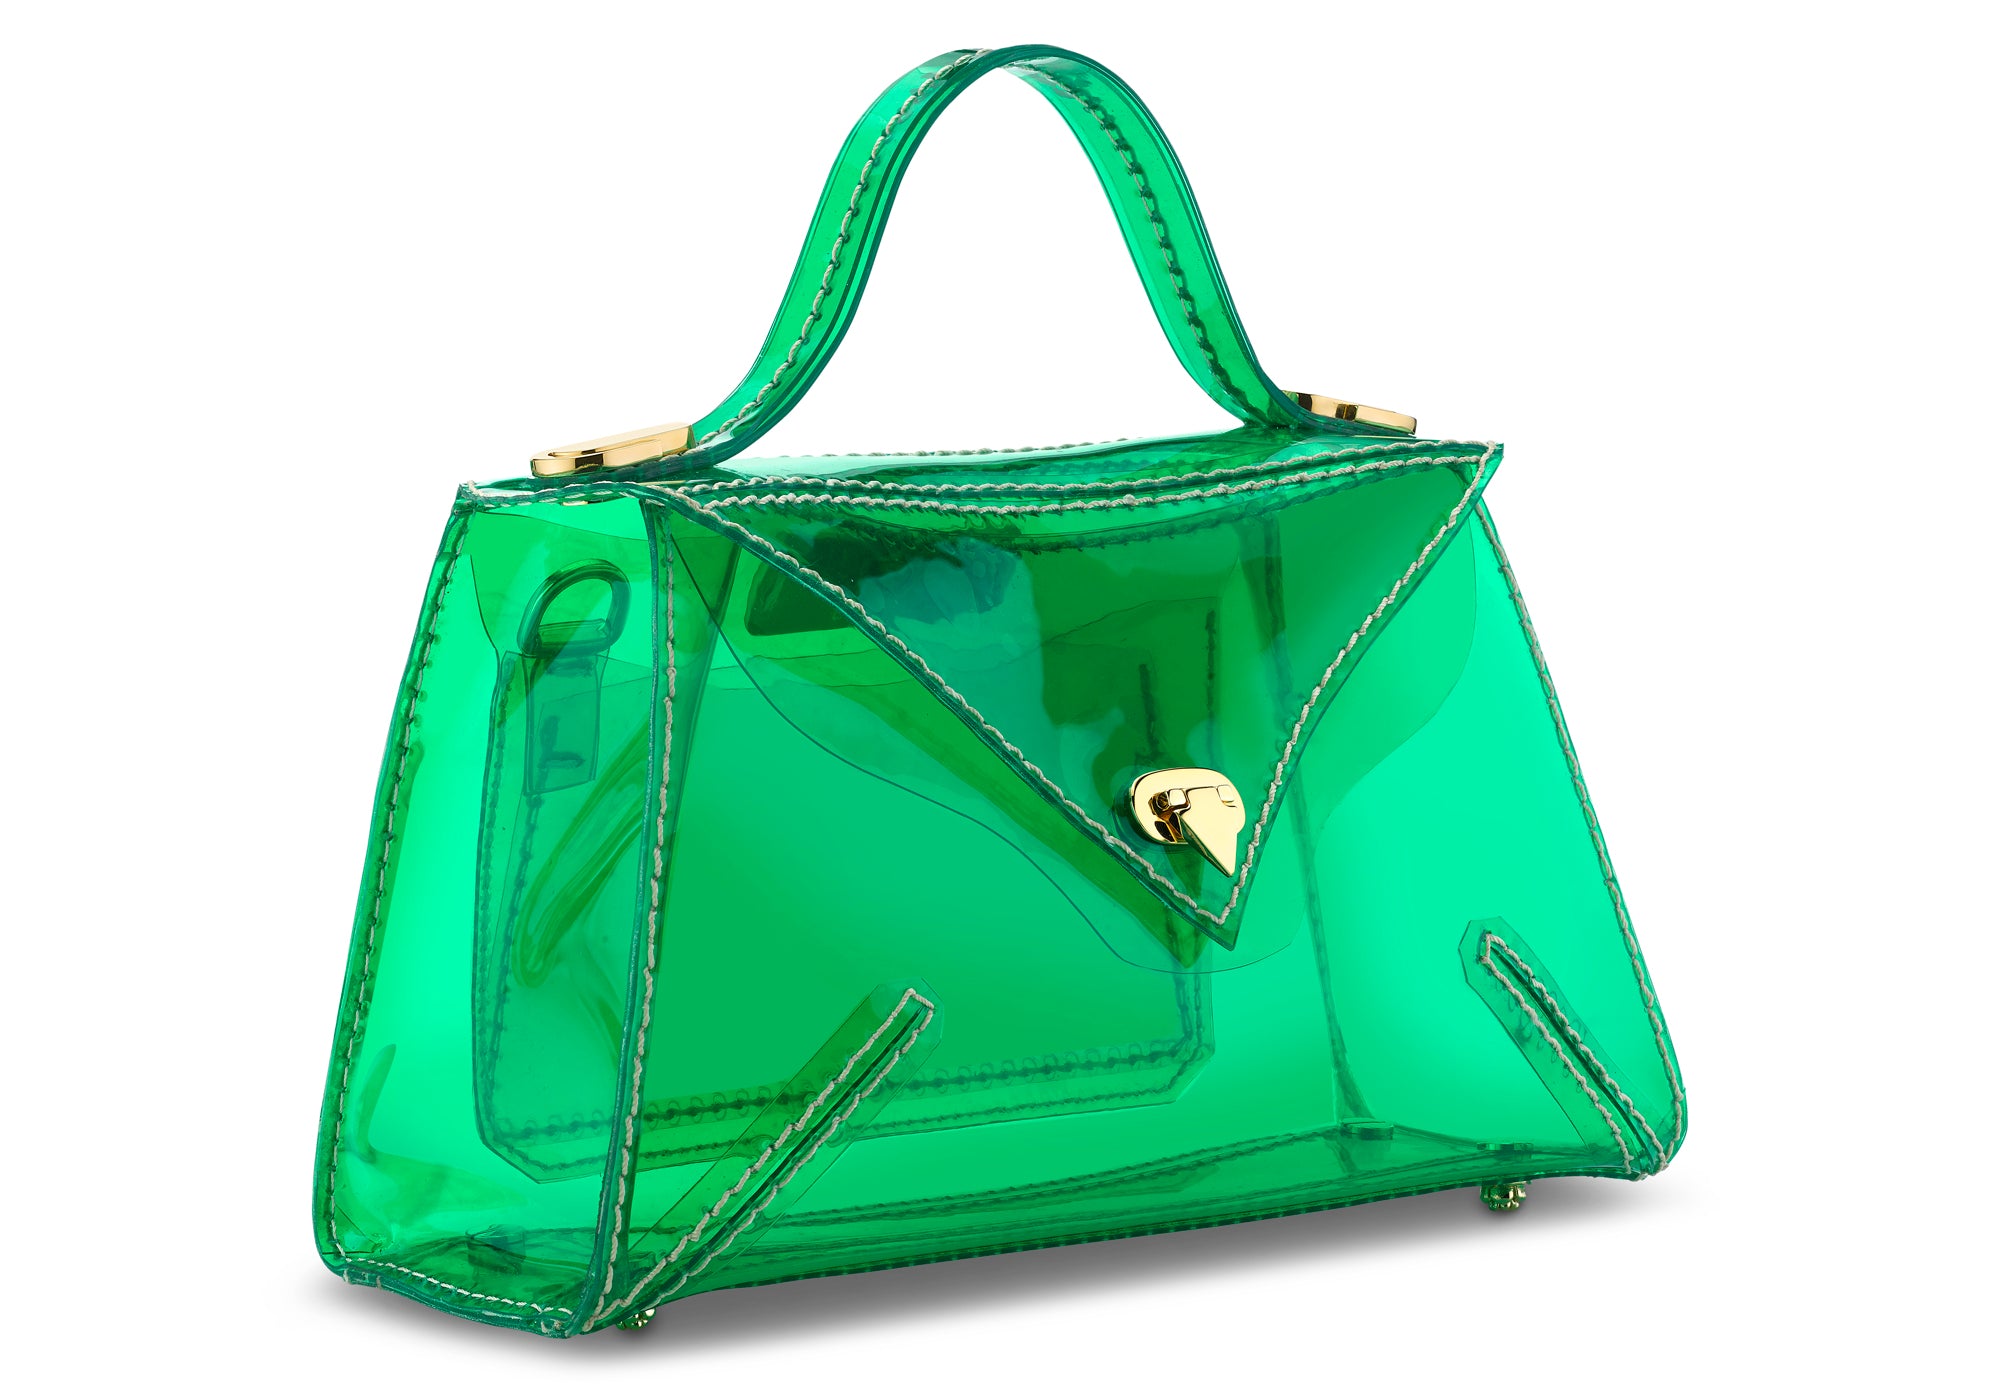 New Look circle detail bag in neon green | ASOS